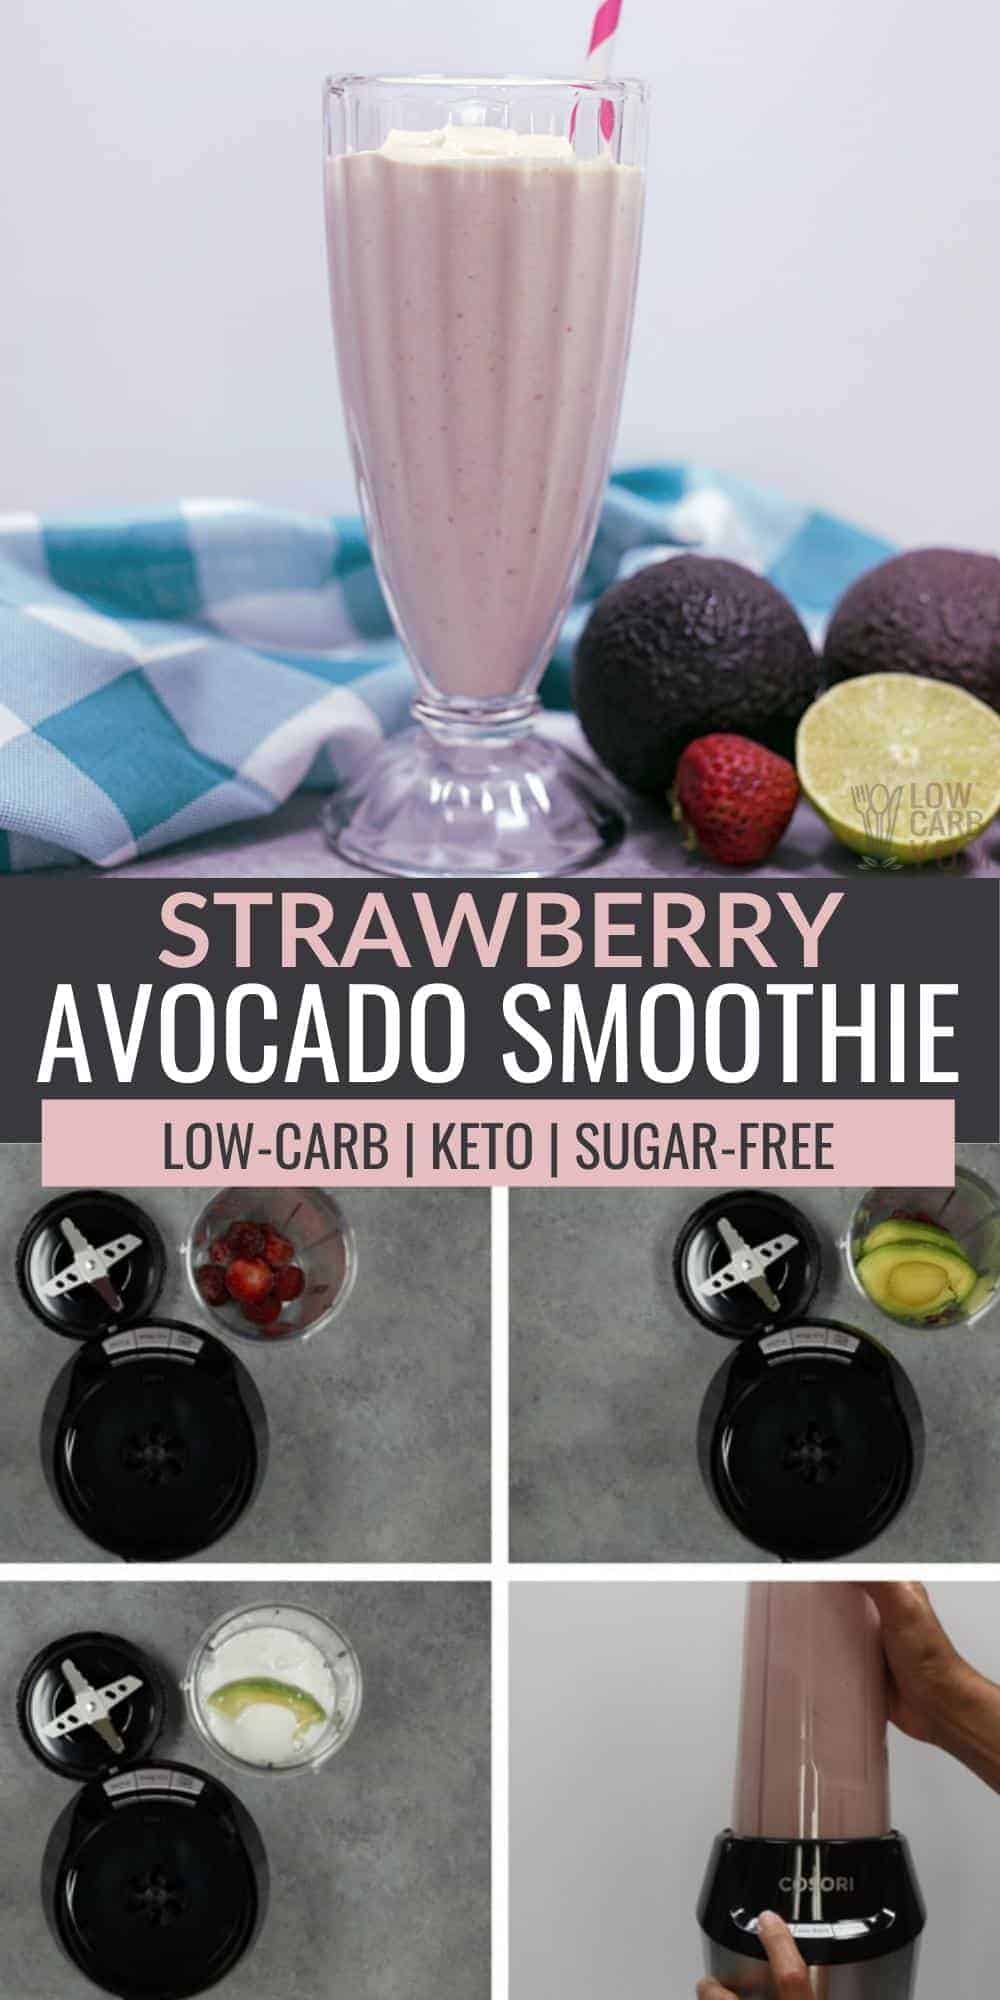 strawberry avocado smoothie pinterest image.